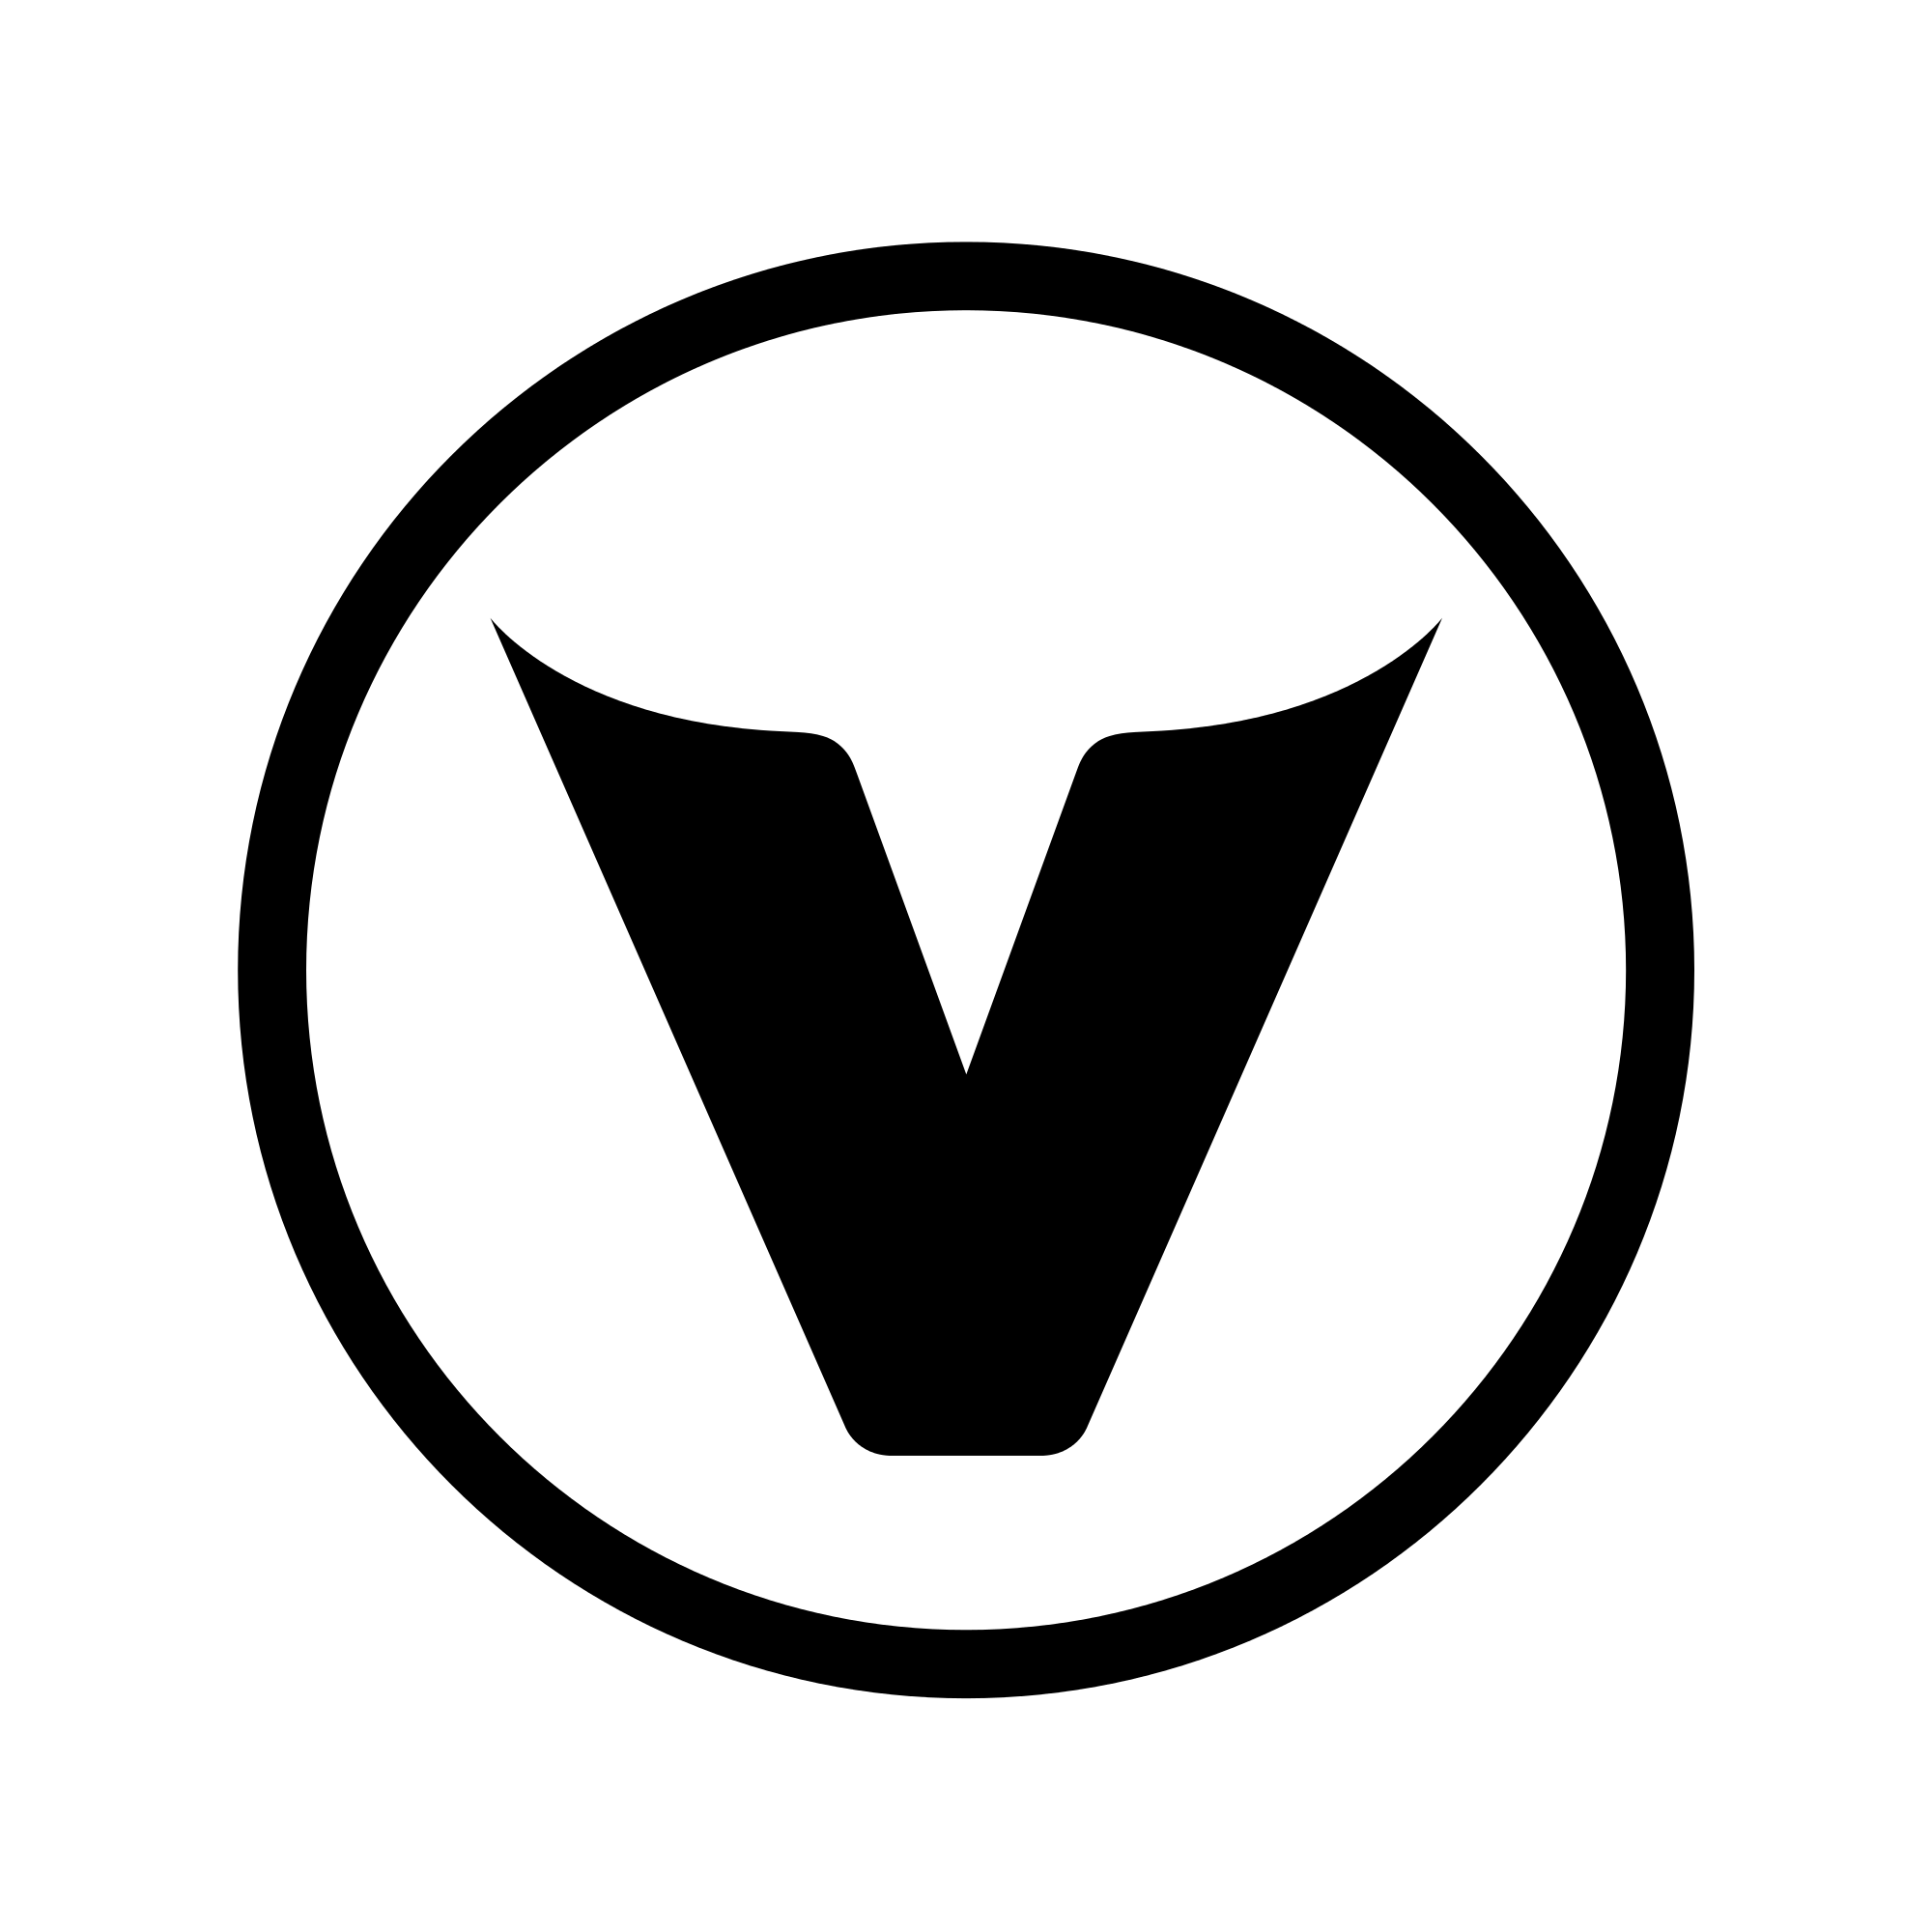 V. Логотип v. Буква v. Логотип с буквой v. Буква v в круге.